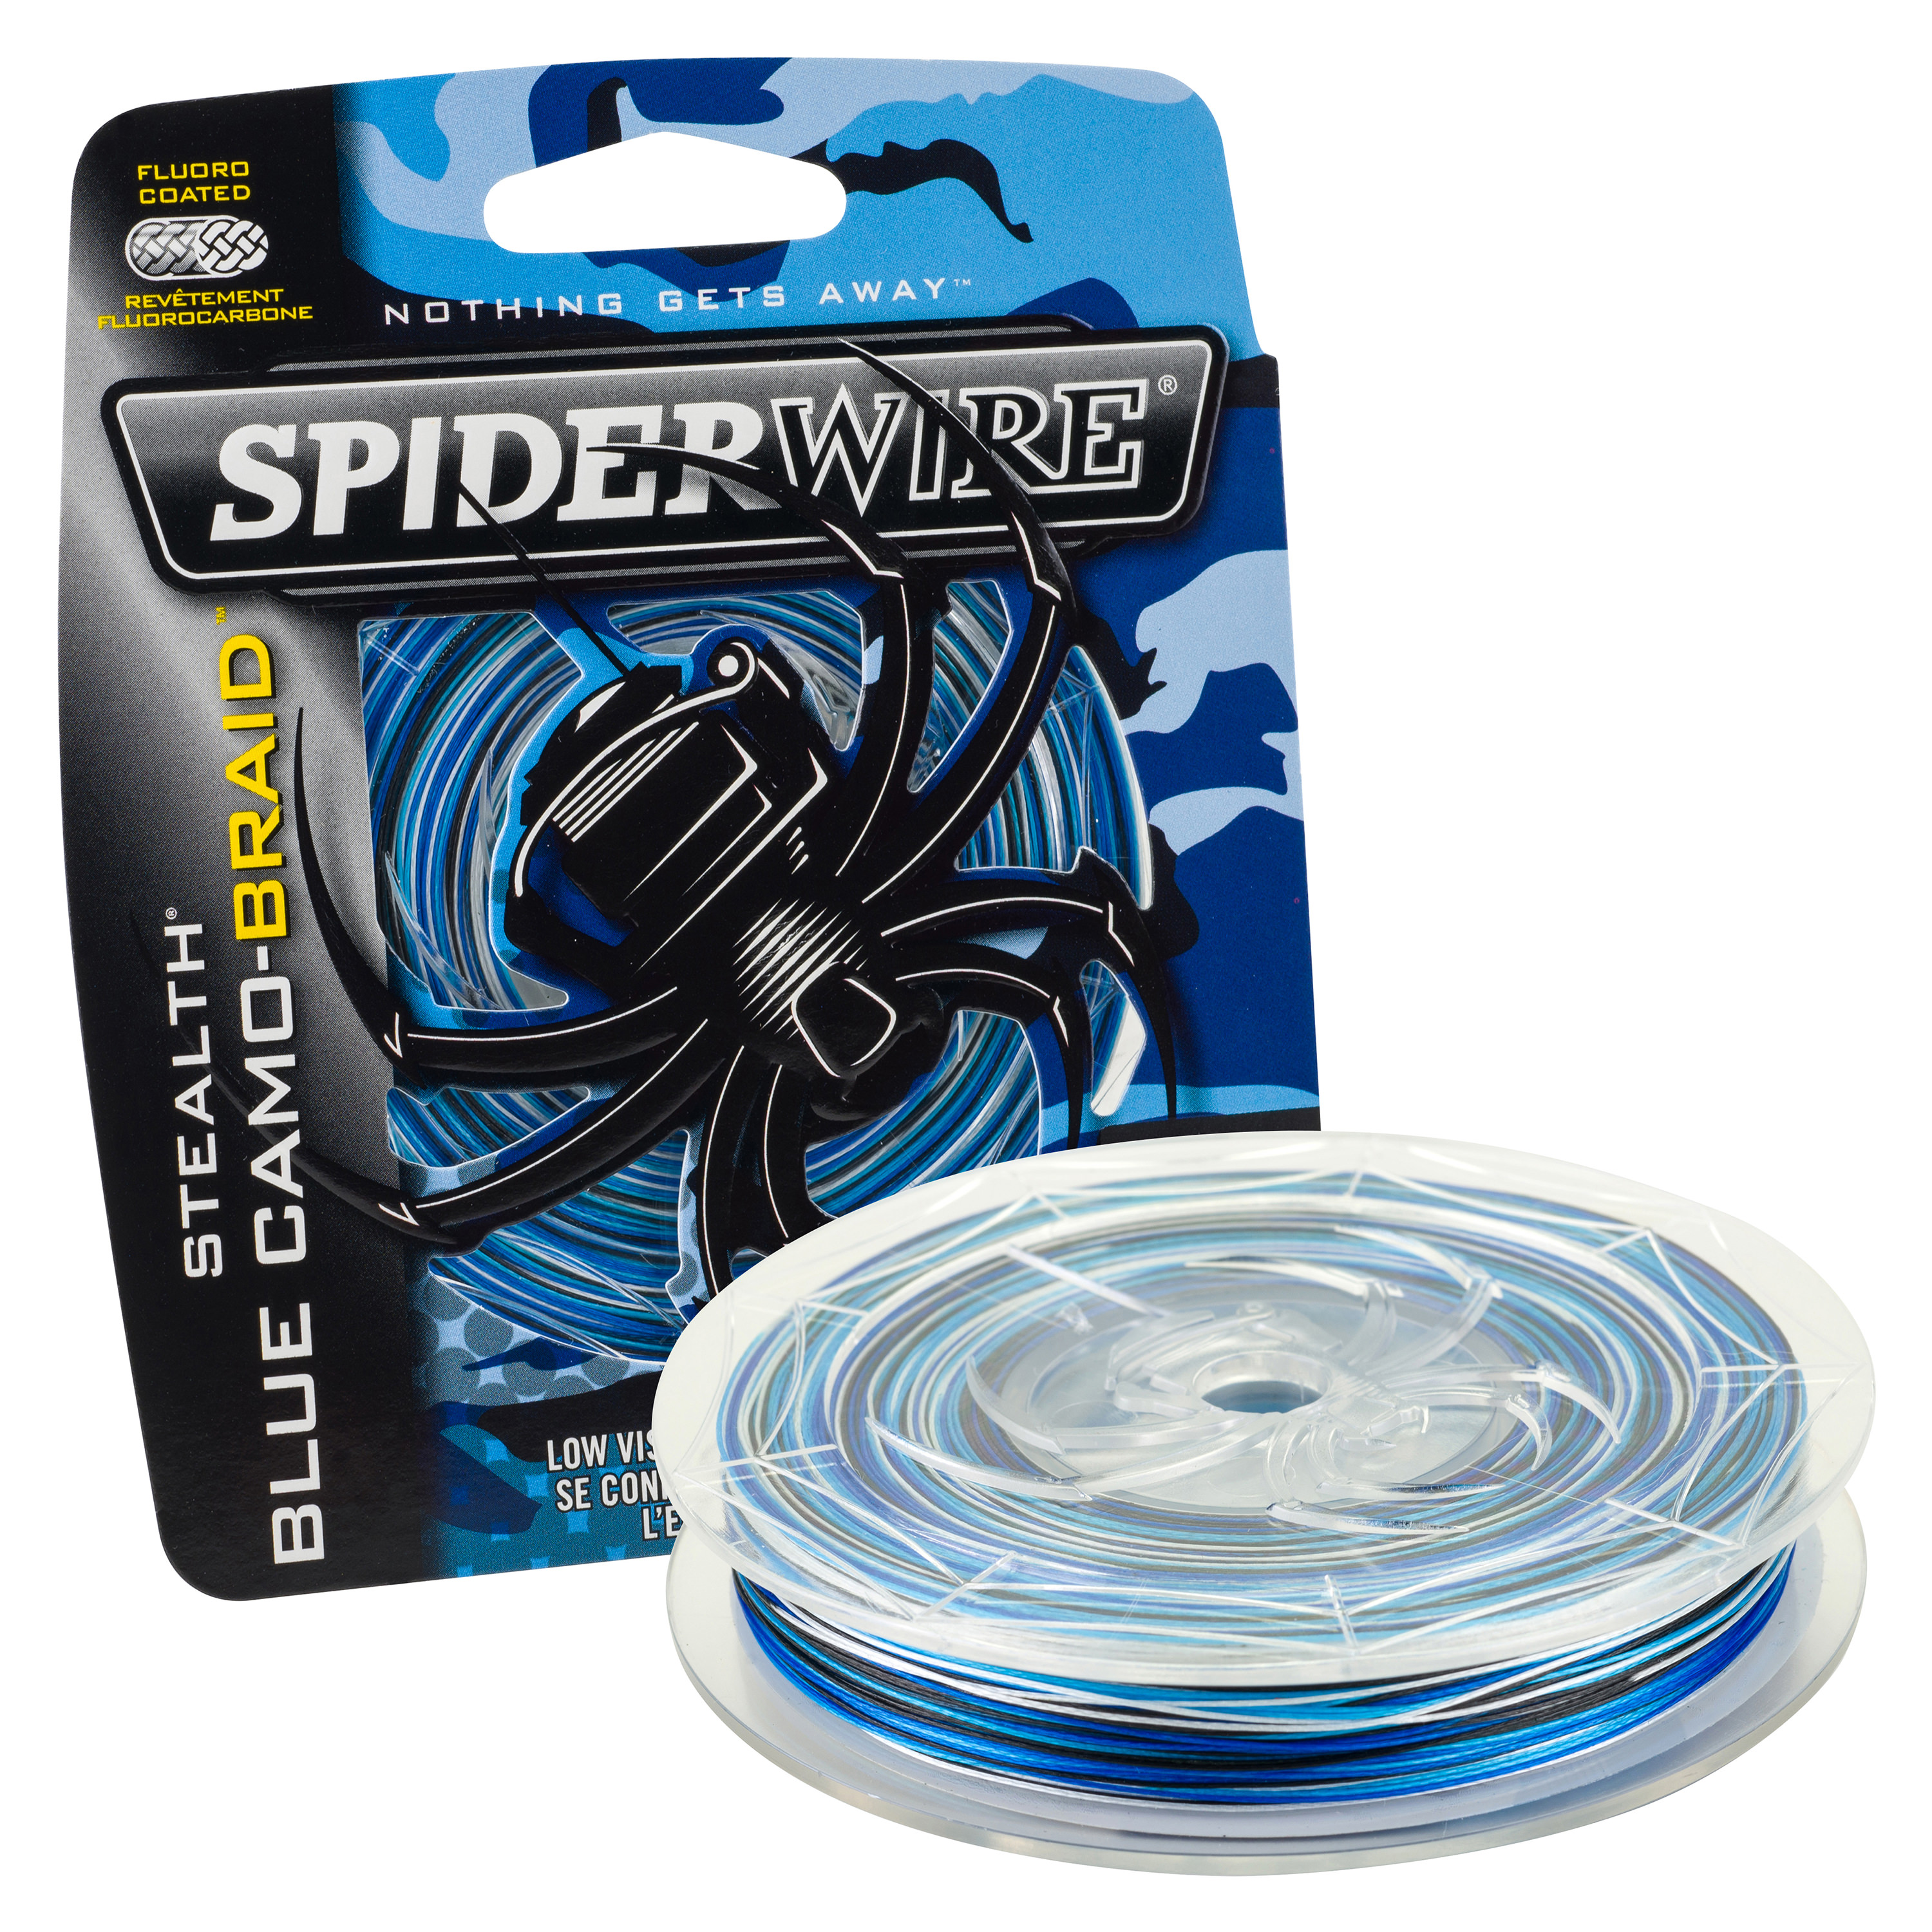  Spiderwire Fishing Line 100lb